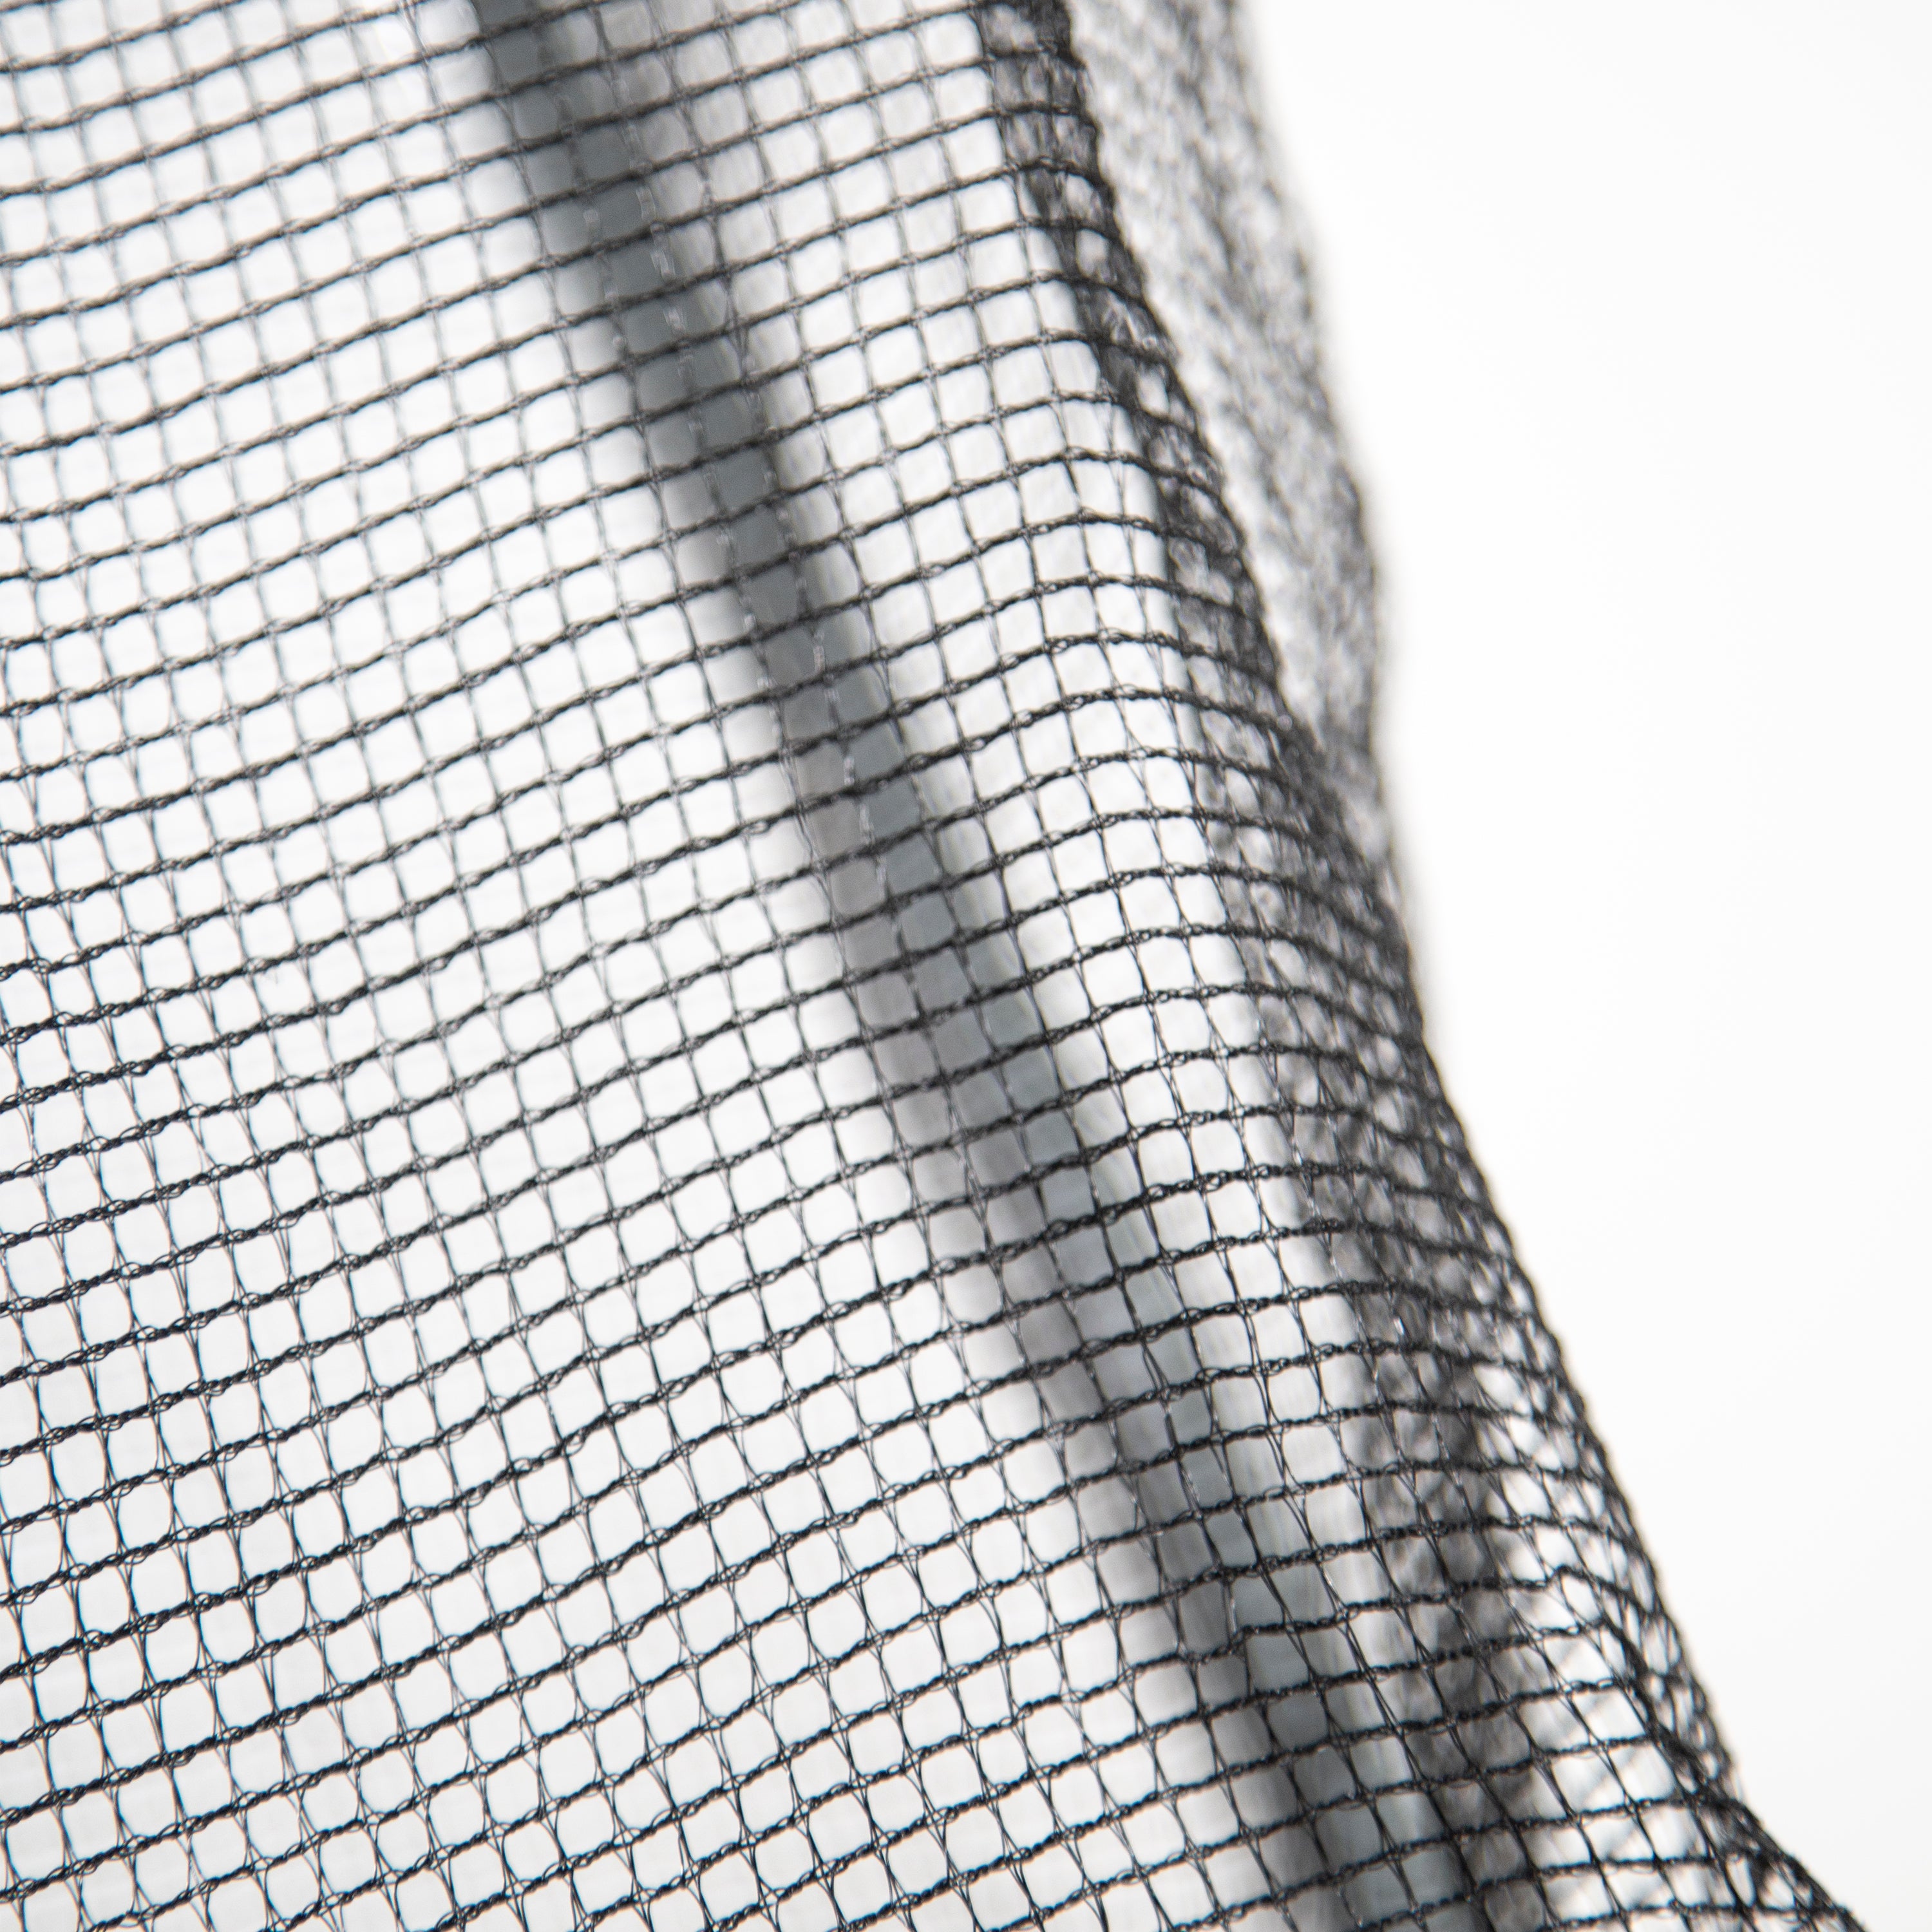 Close-up view of the black, UV-treated polyethylene netting. 